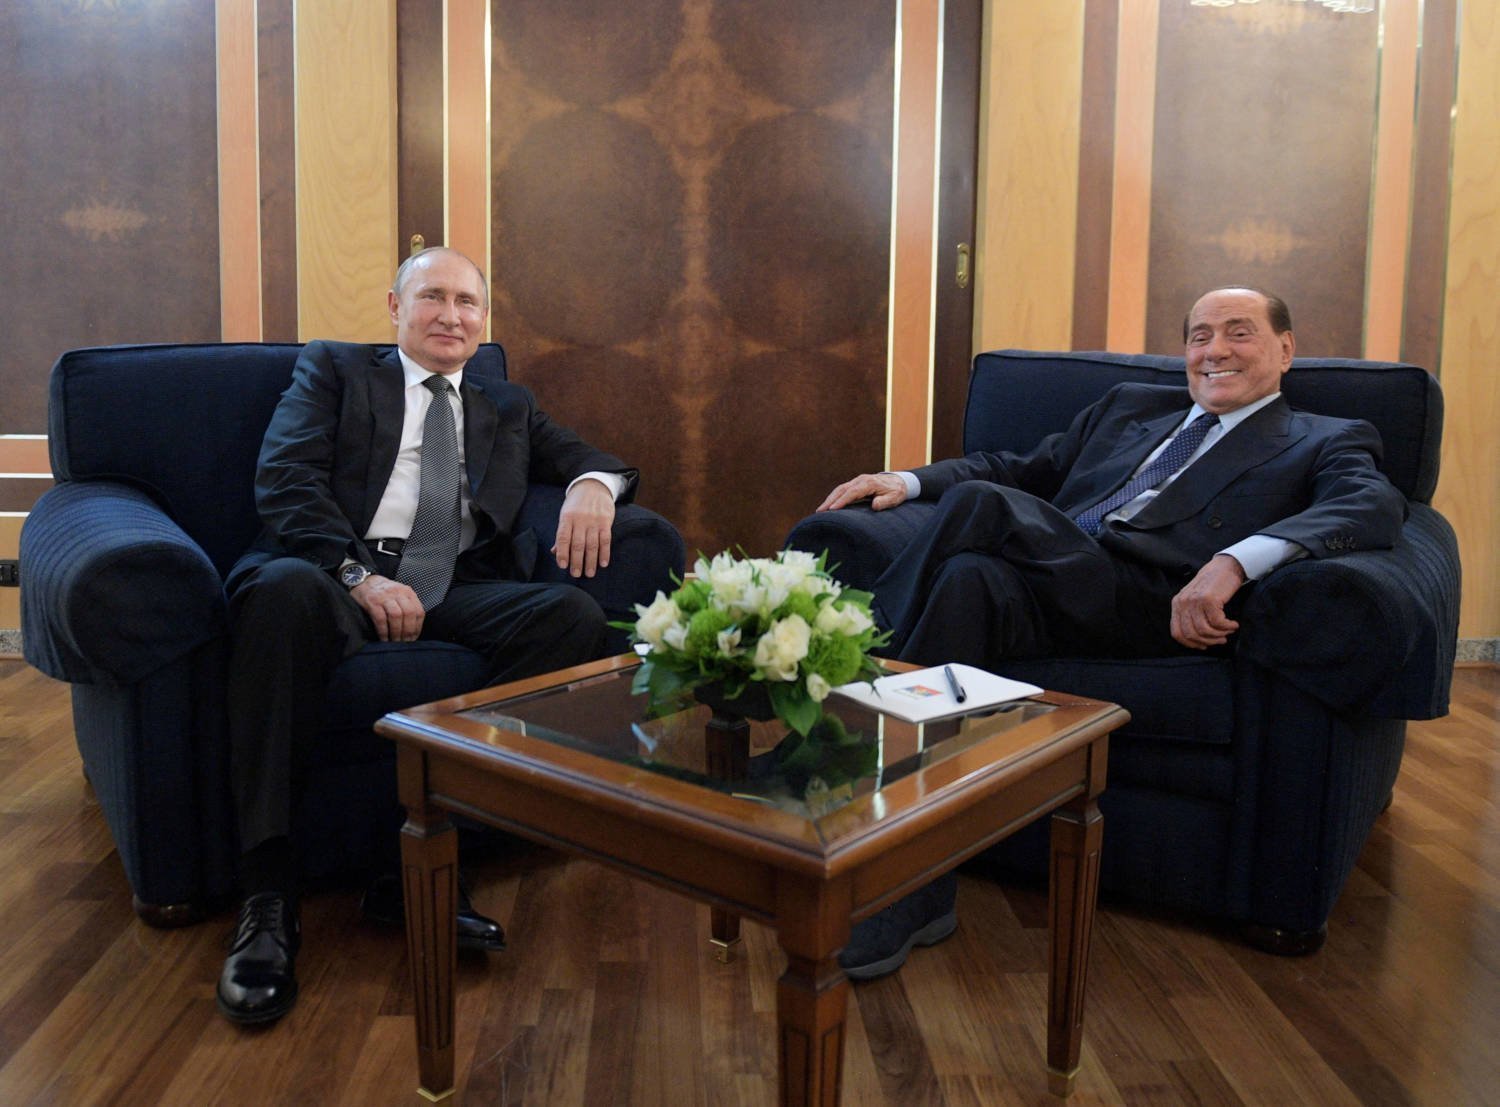 File Photo: Russian President Putin Meets With Italian Member Of The European Parliament Berlusconi In Rome